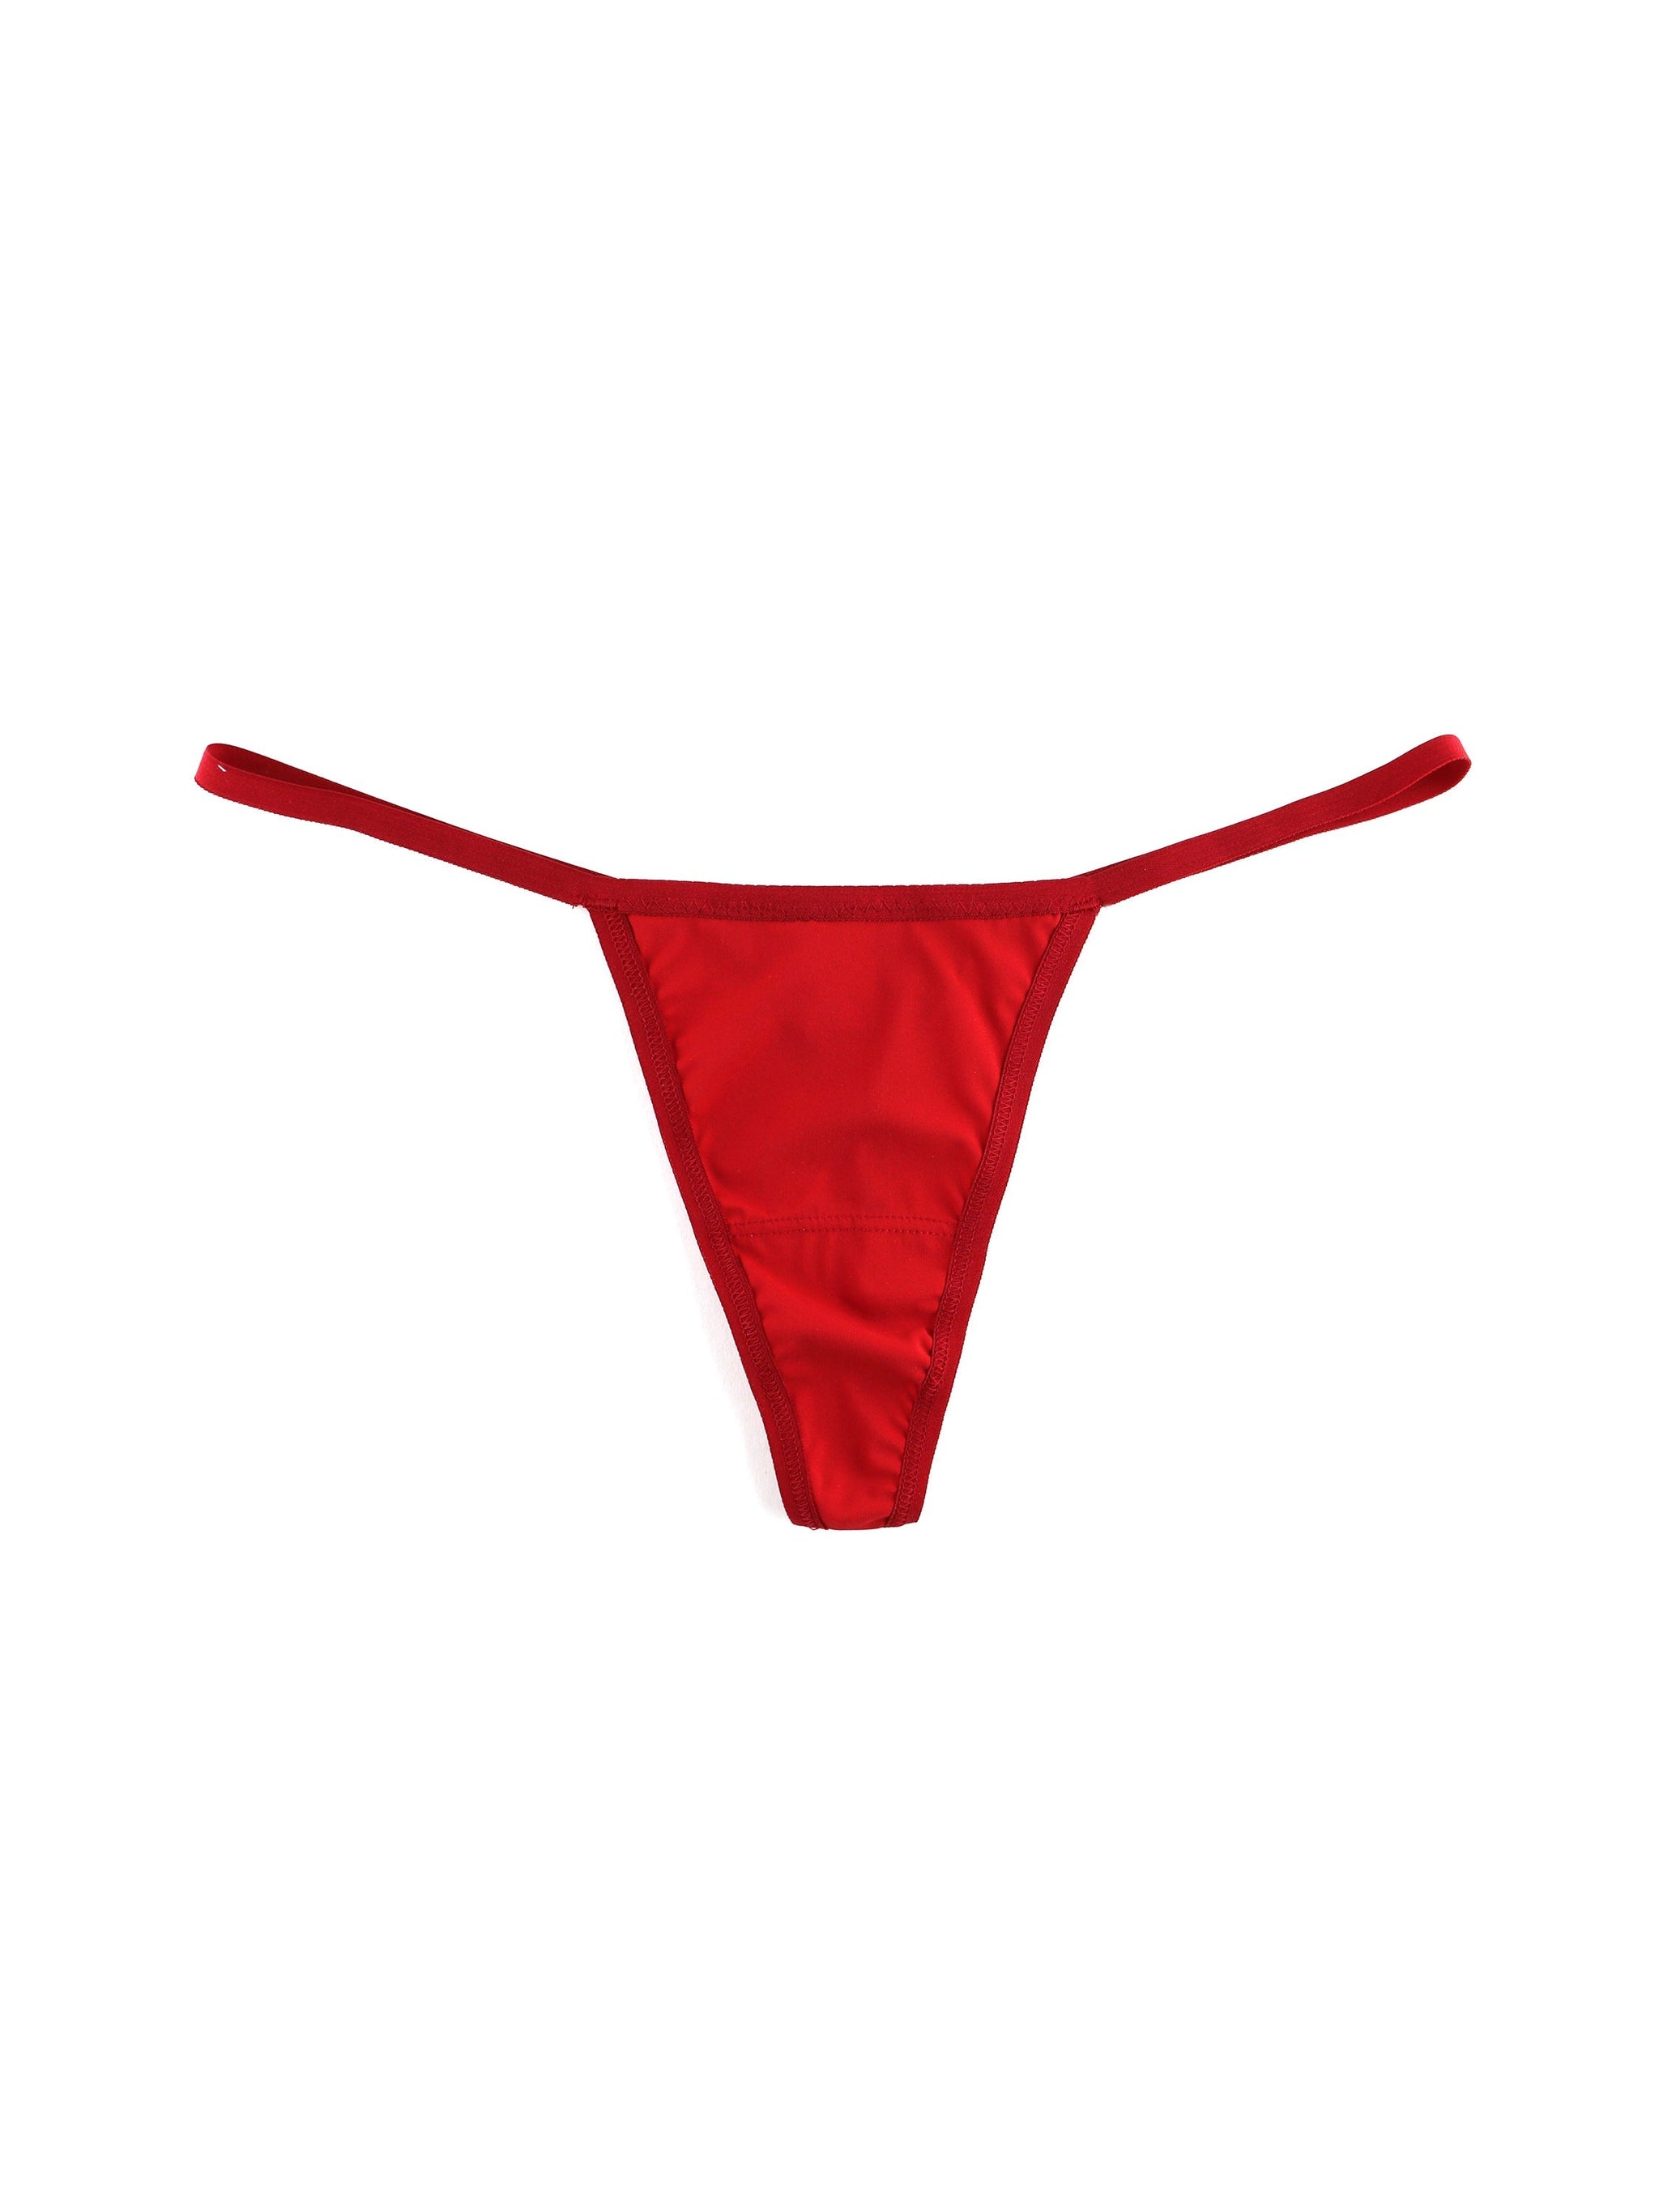 NEW WHOLESALE LOT 30 Pieces Women Thongs G-String Panties